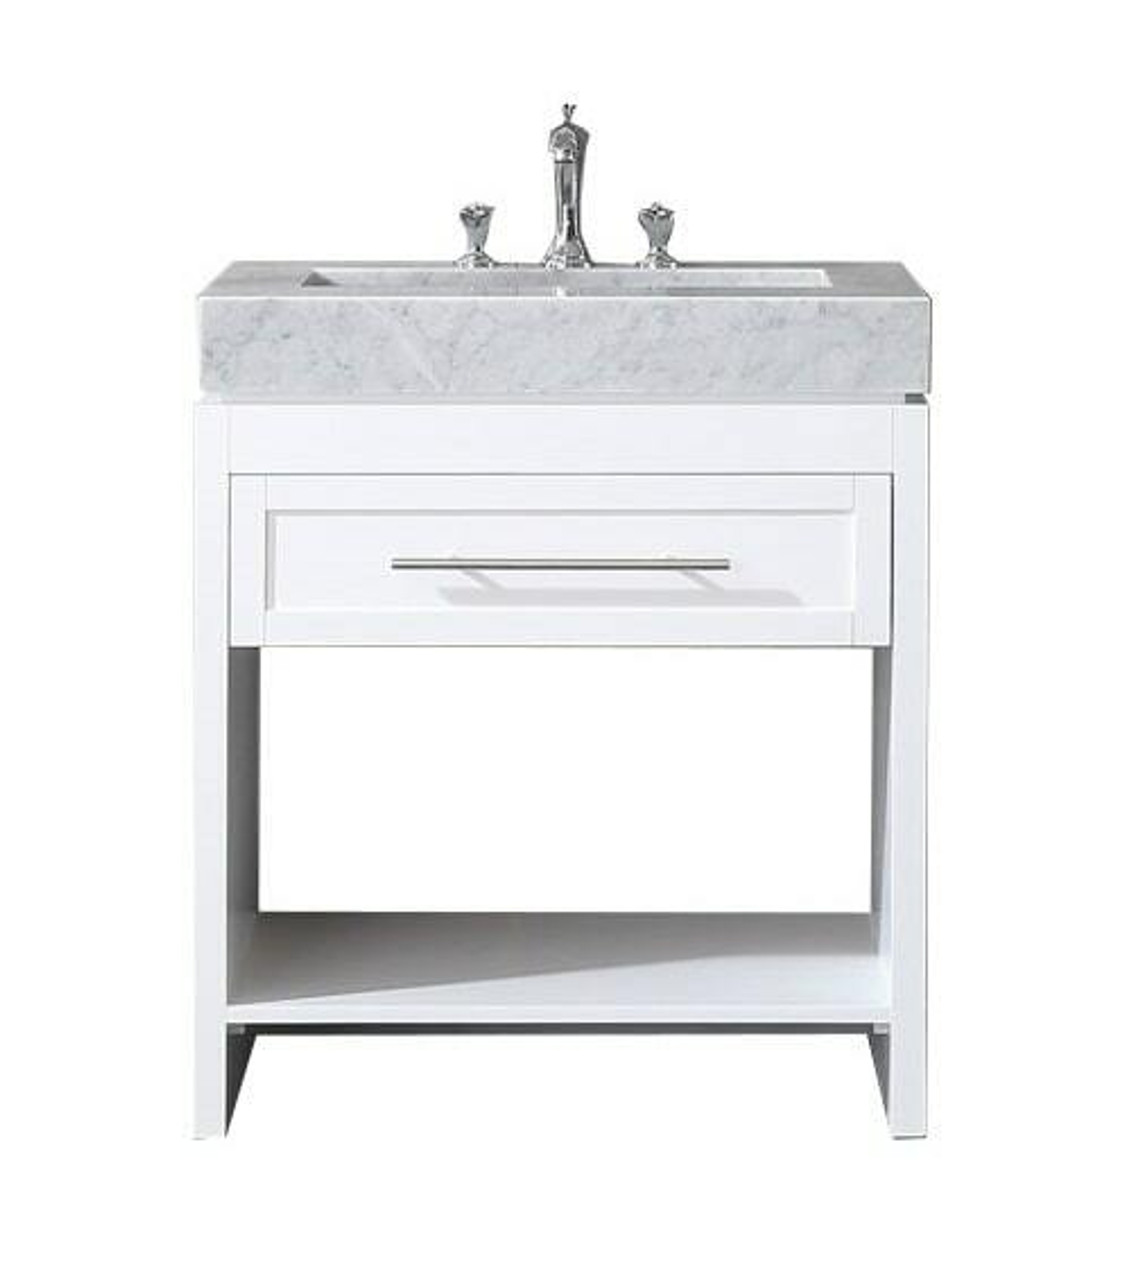 Venetian 36 In Single Sink Bathroom Vanity In White With Carrera White Marble Countertop